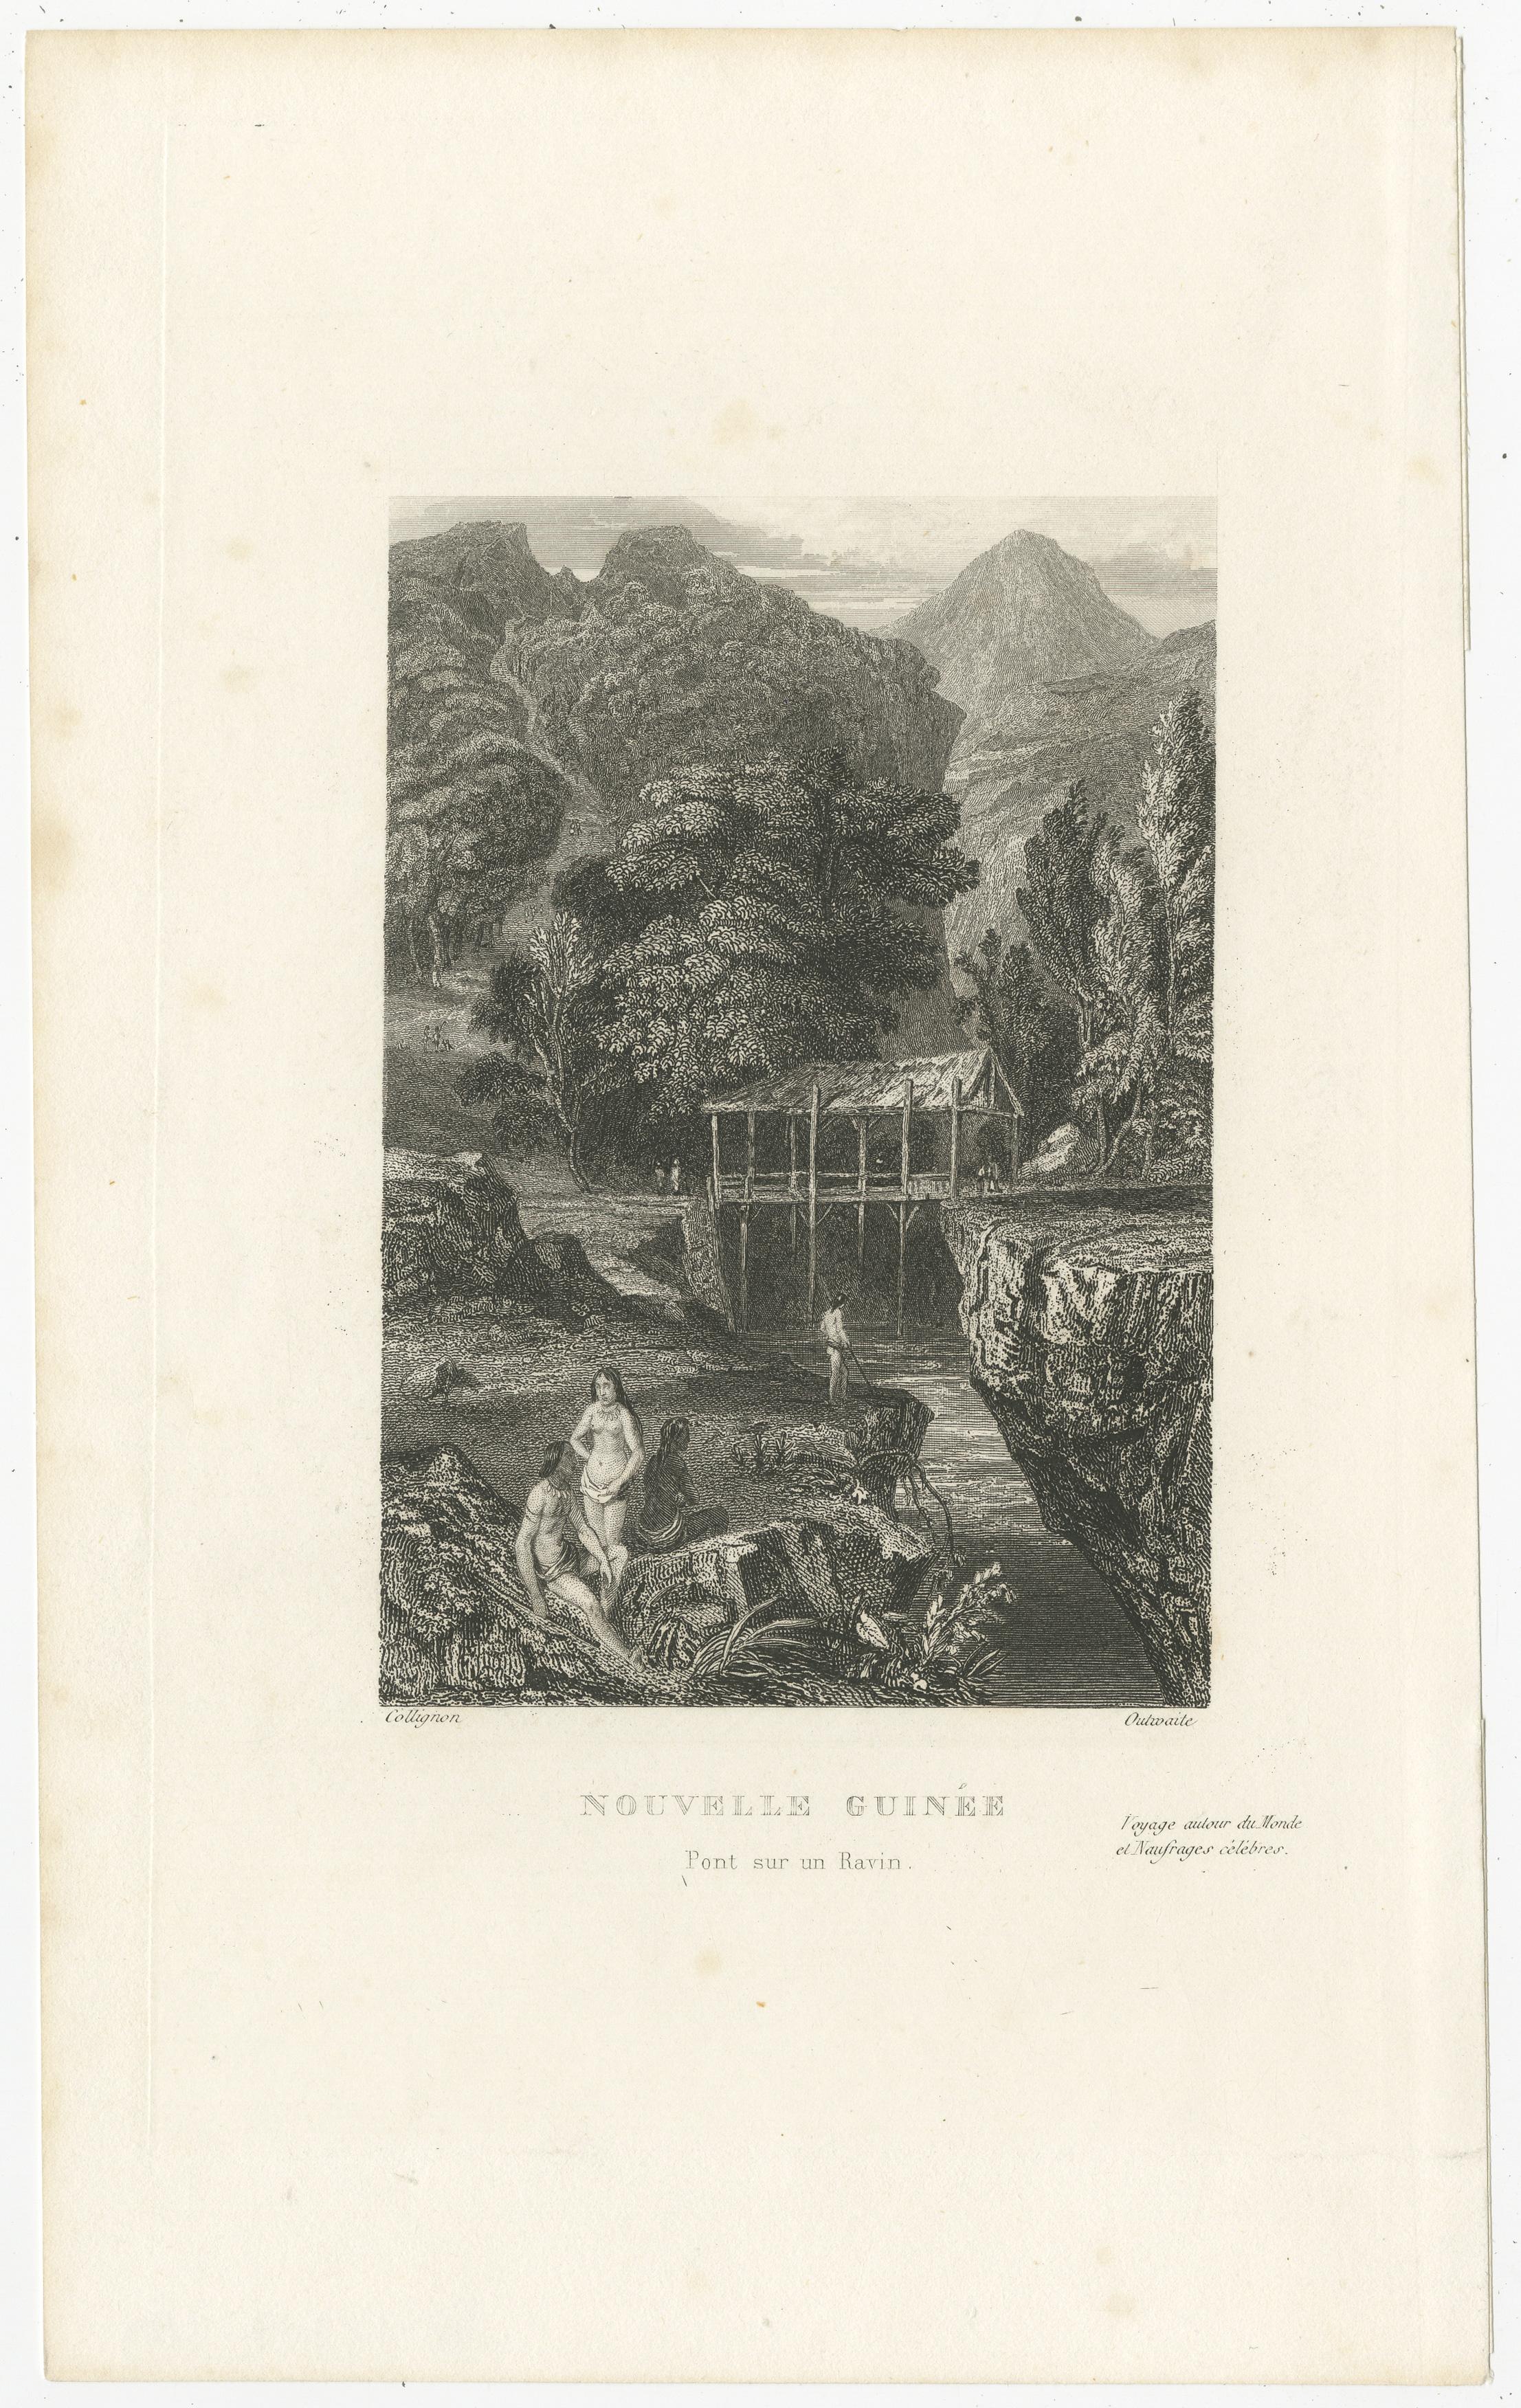 Antique print titled 'Nouvelle Guinée Pont sur un Ravin'. Original old print of a bridge over a ravine in New Guinea. Engraved by J. Outhwaite after J. Collignon. Published circa 1850.